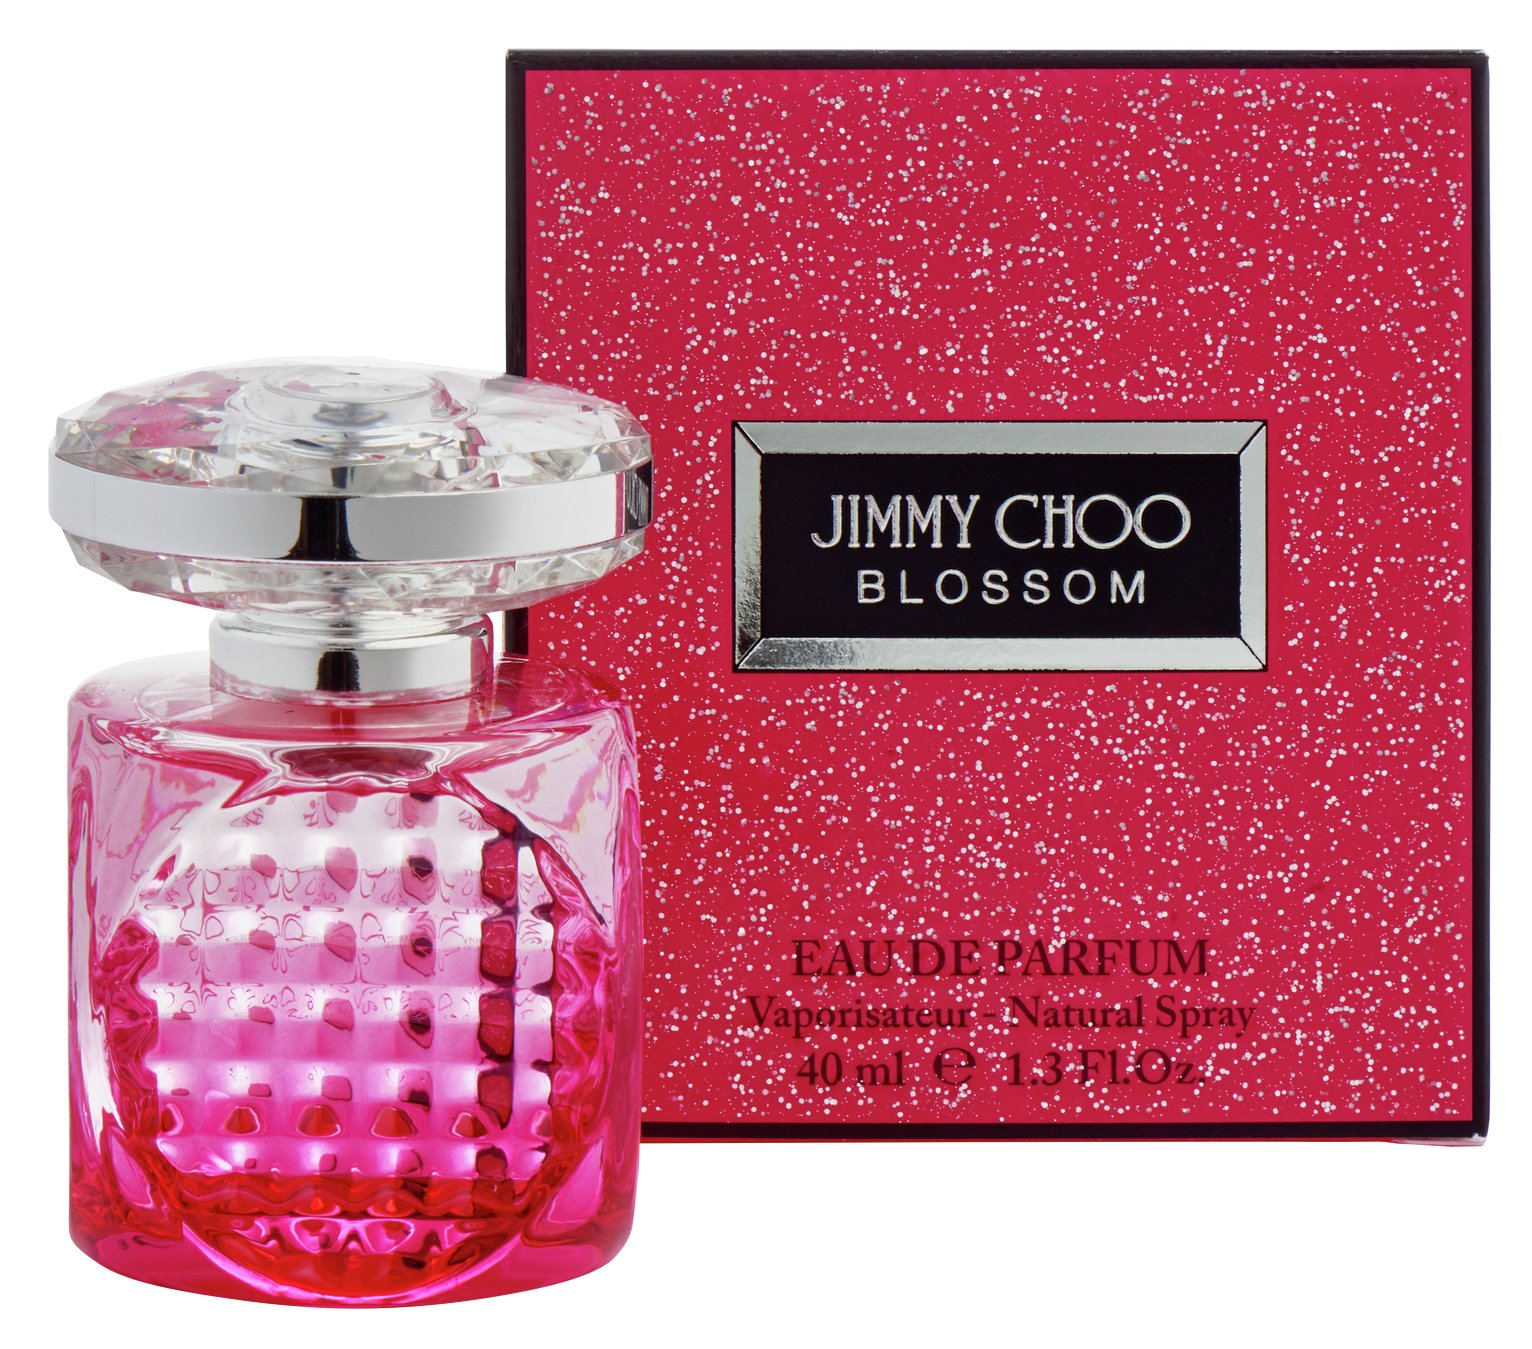 Jimmy Choo Blossom for Women Eau de Parfum Reviews